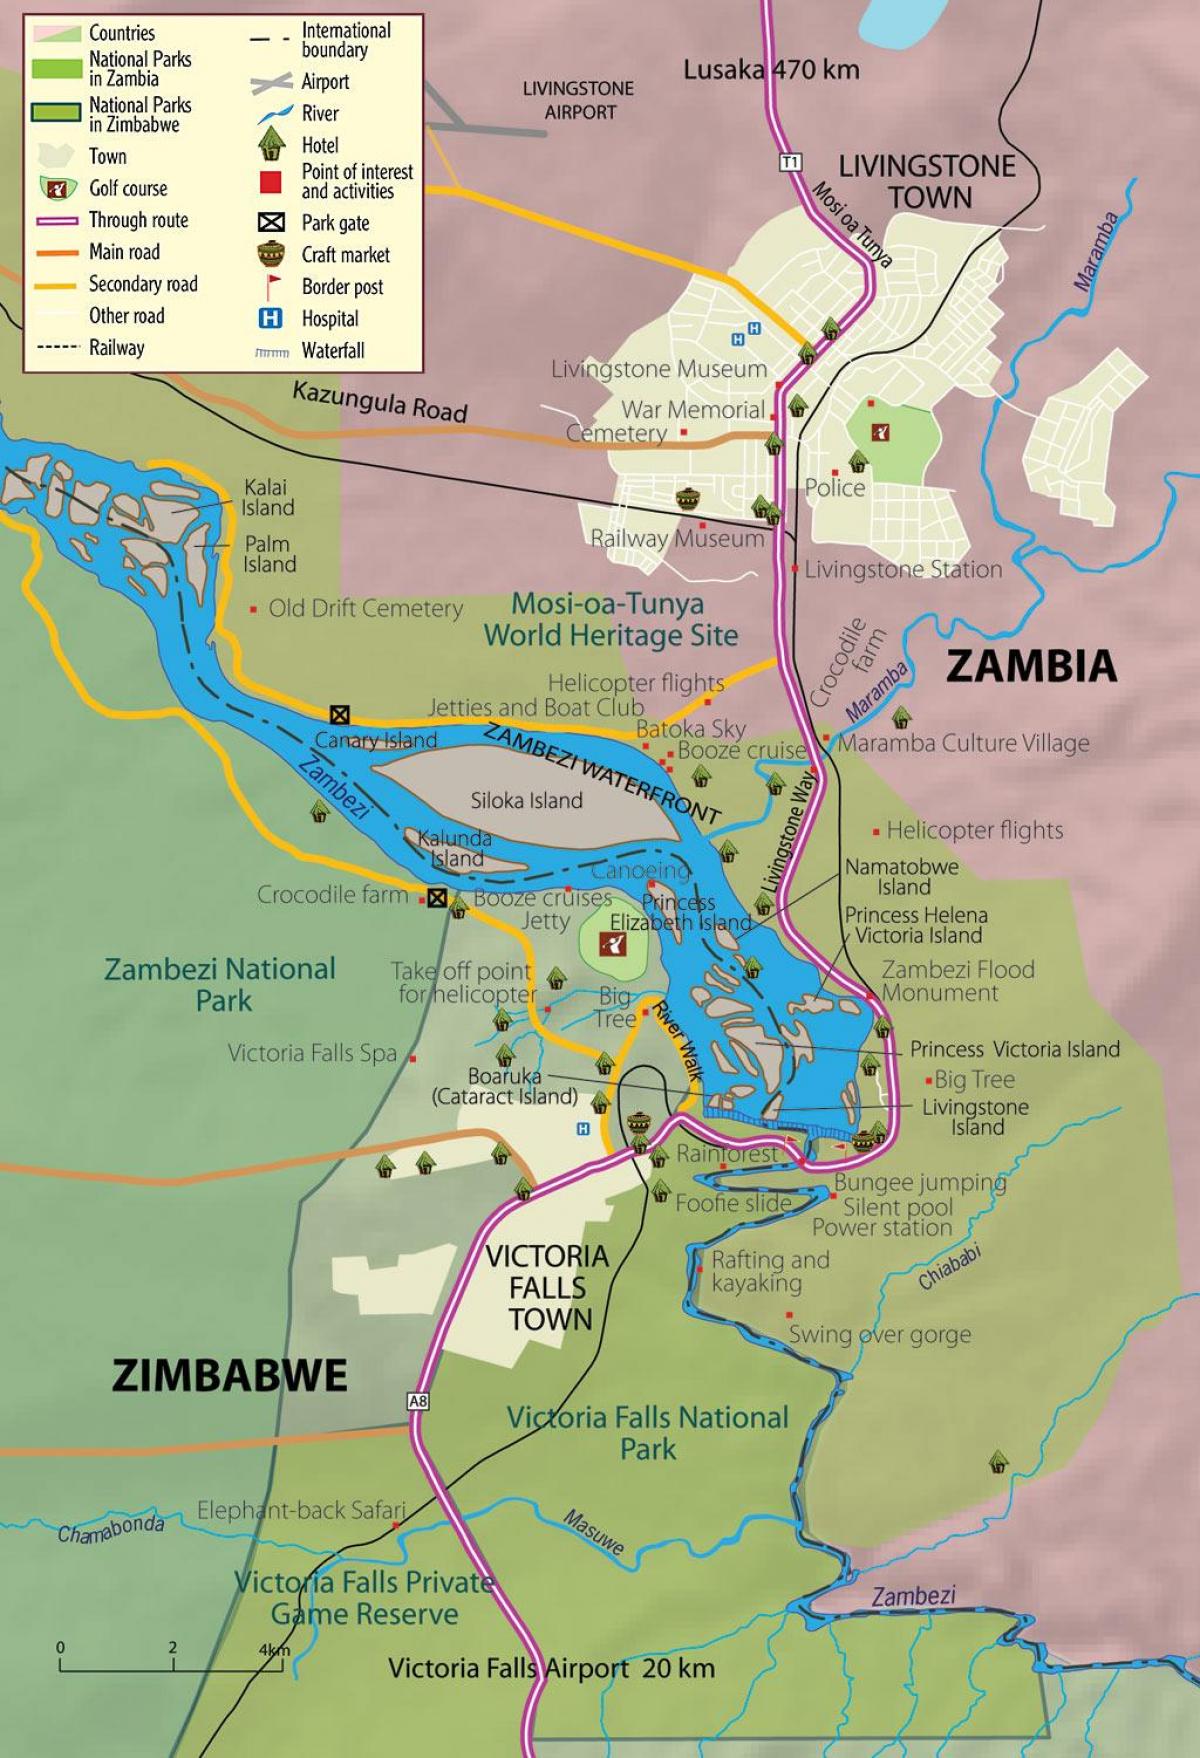 kort over livingstone town, Zambia